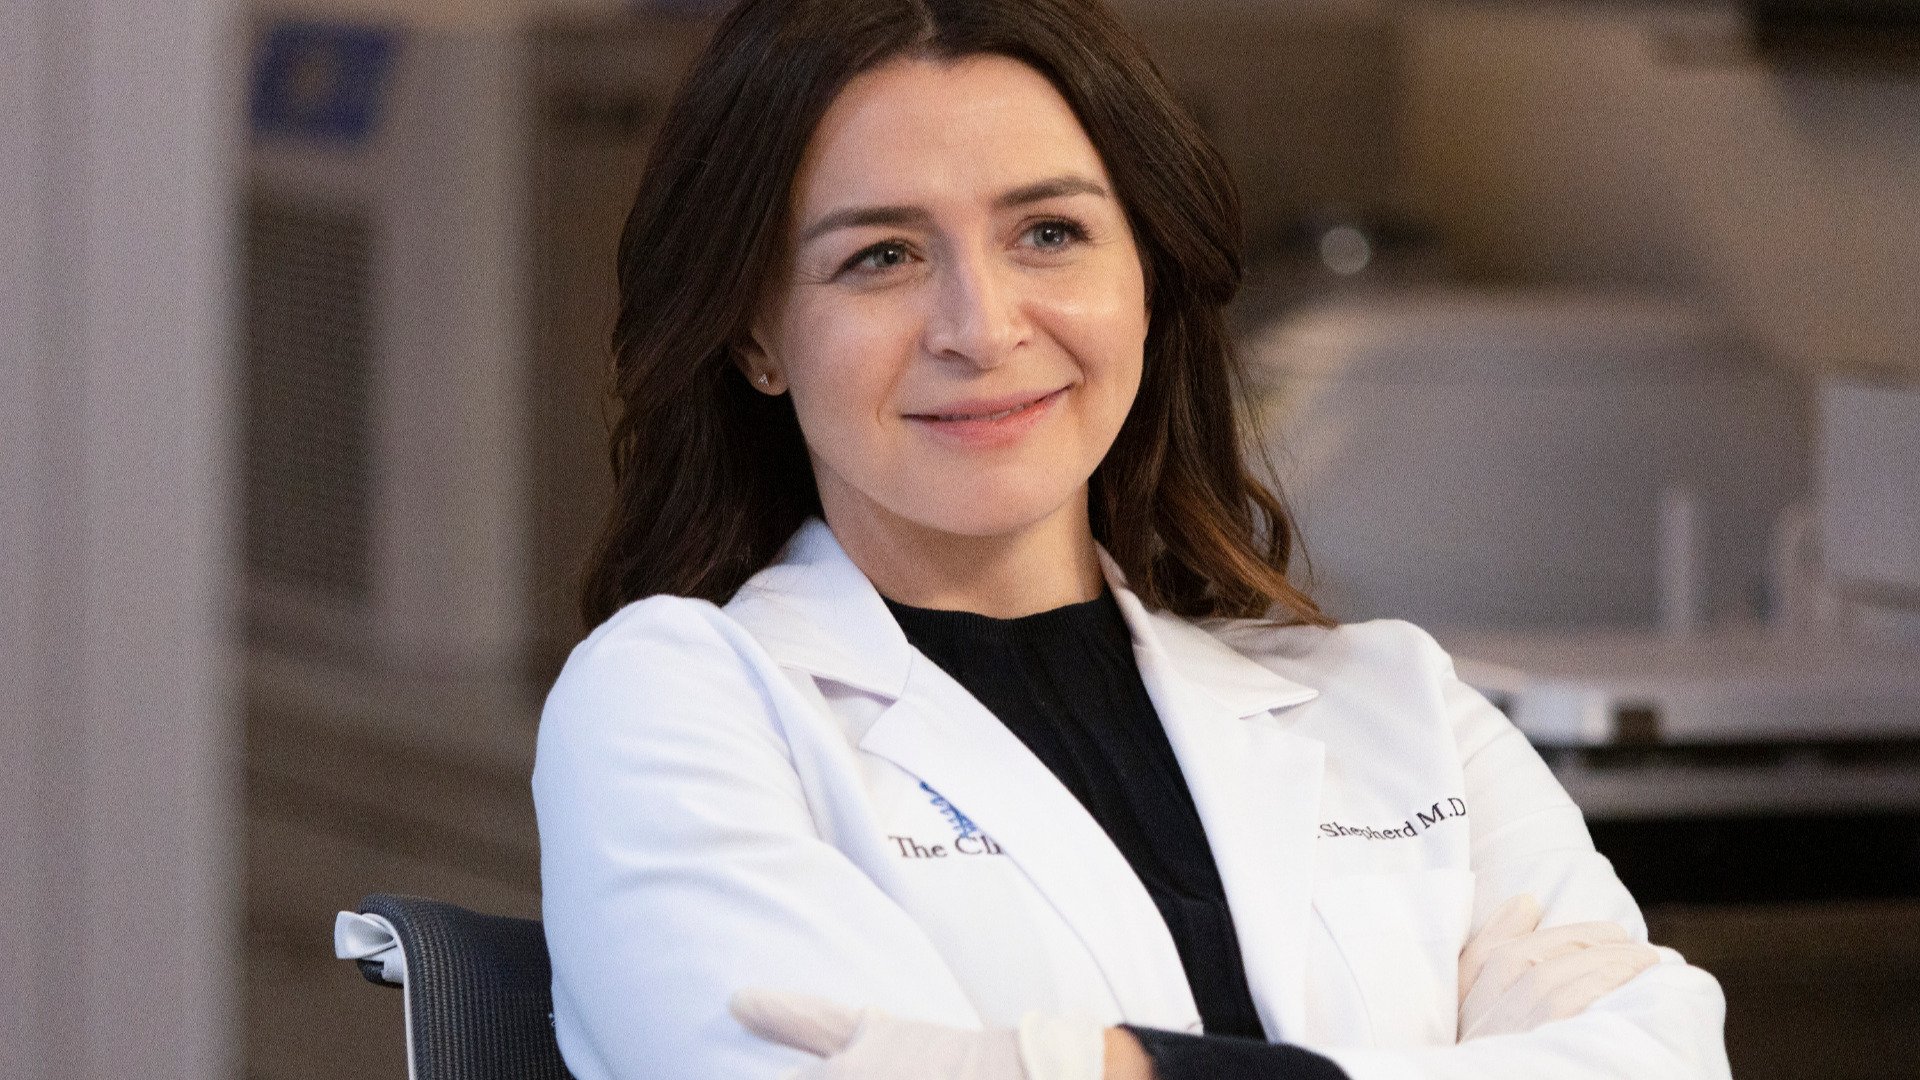 Caterina Scorsone as Amelia Shepherd smiling in ‘Grey’s Anatomy’ Season 18